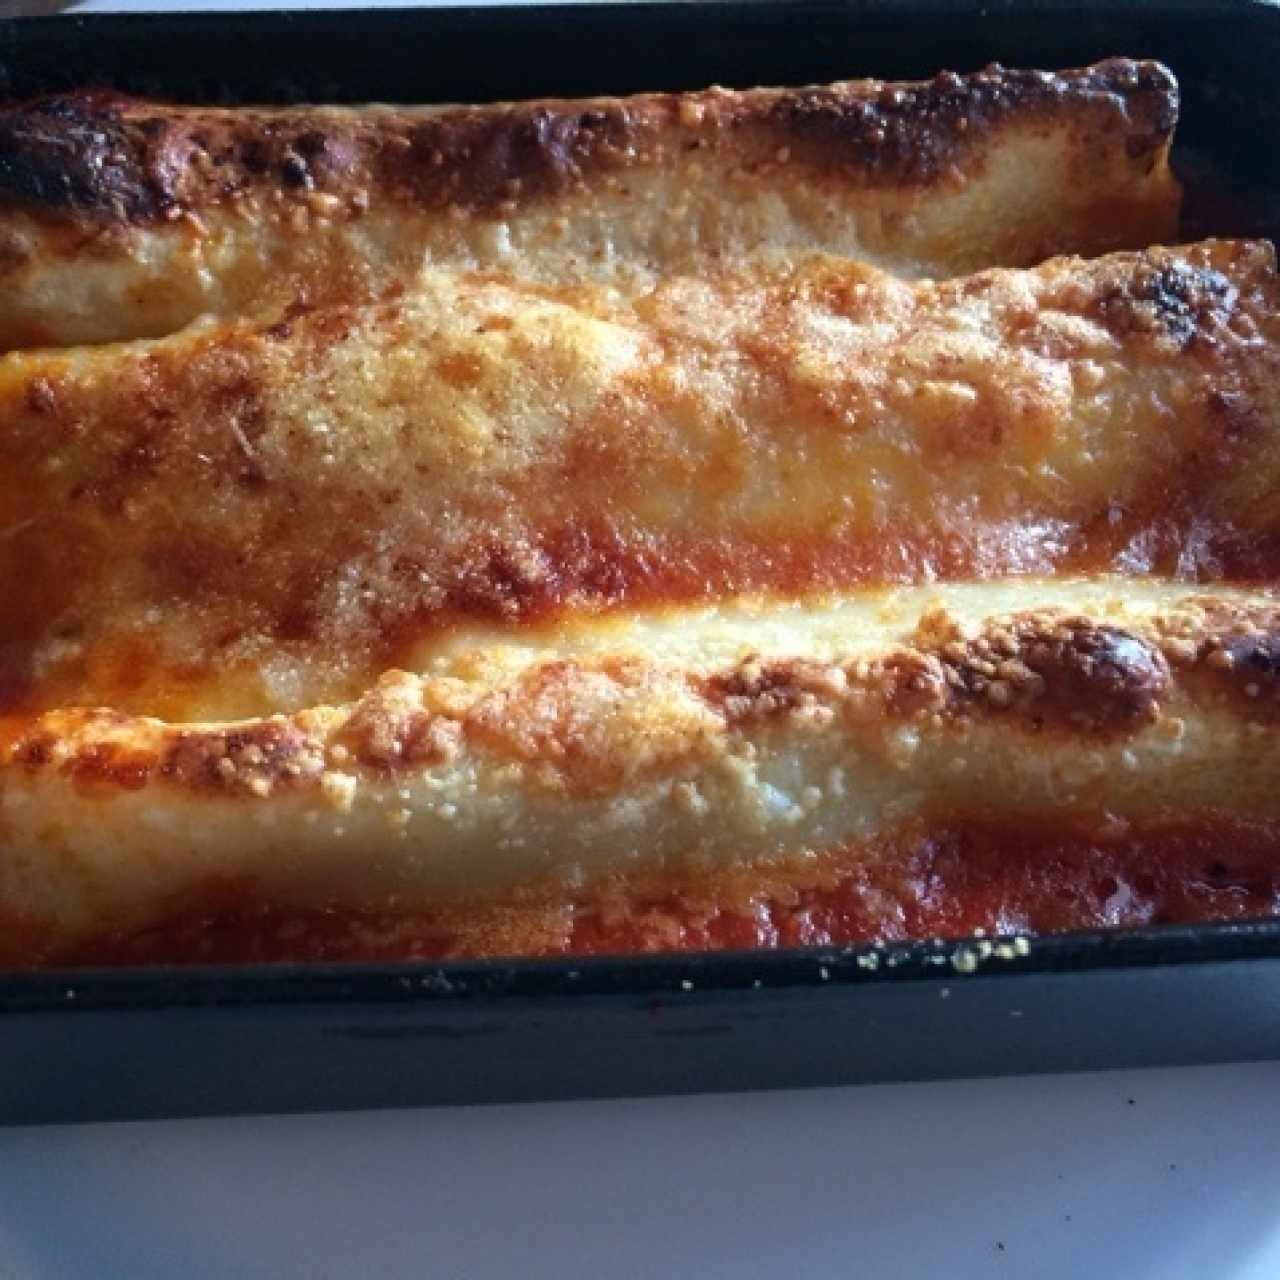 Pastas especiales - Cannelloni rossini